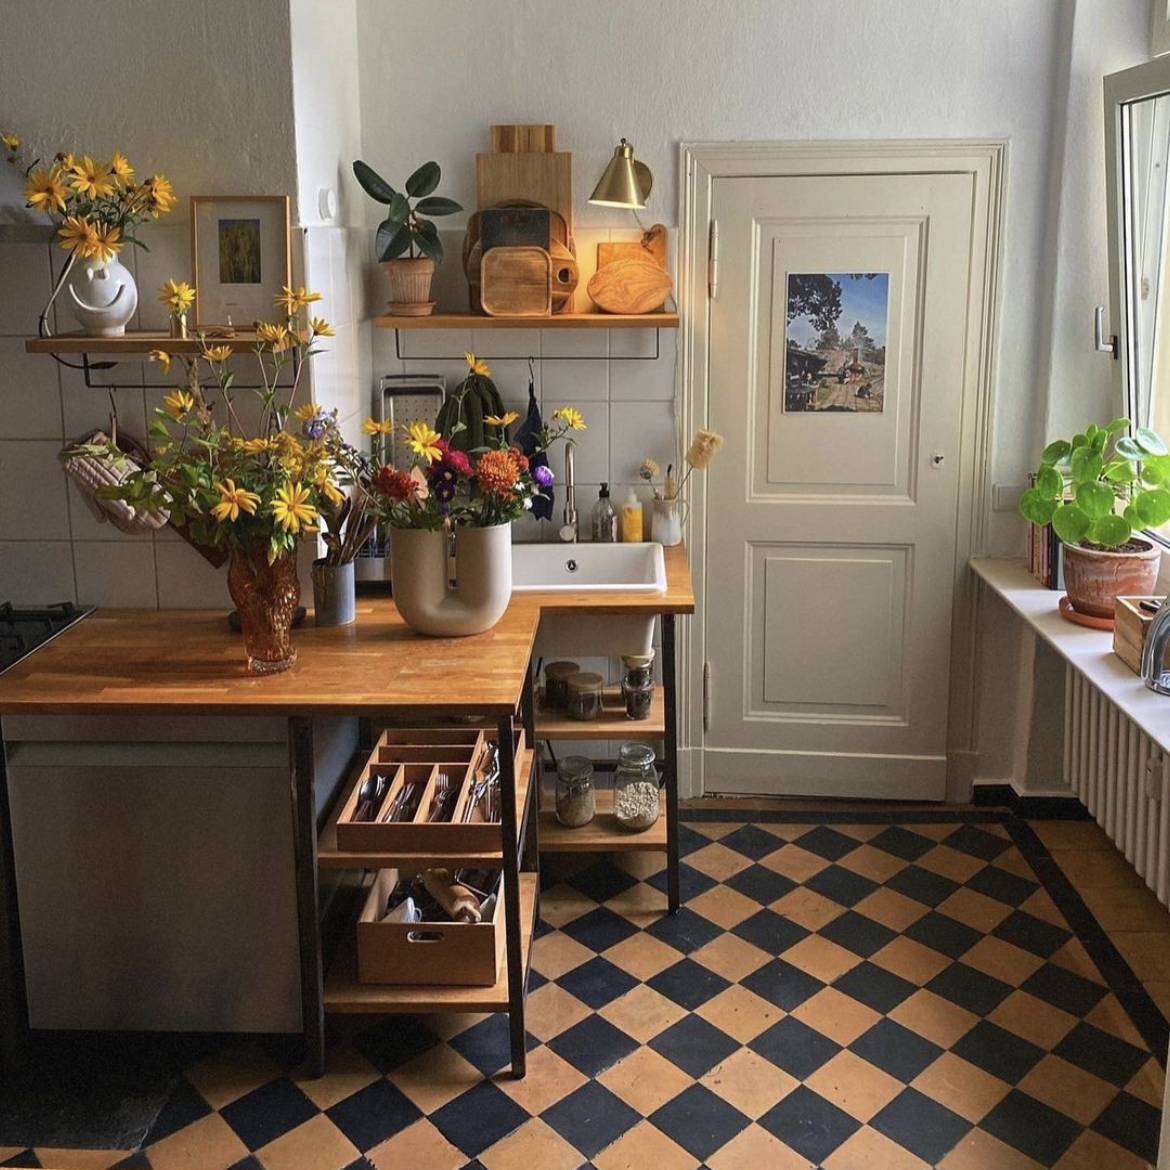 black and orange kitchen tile floor 2